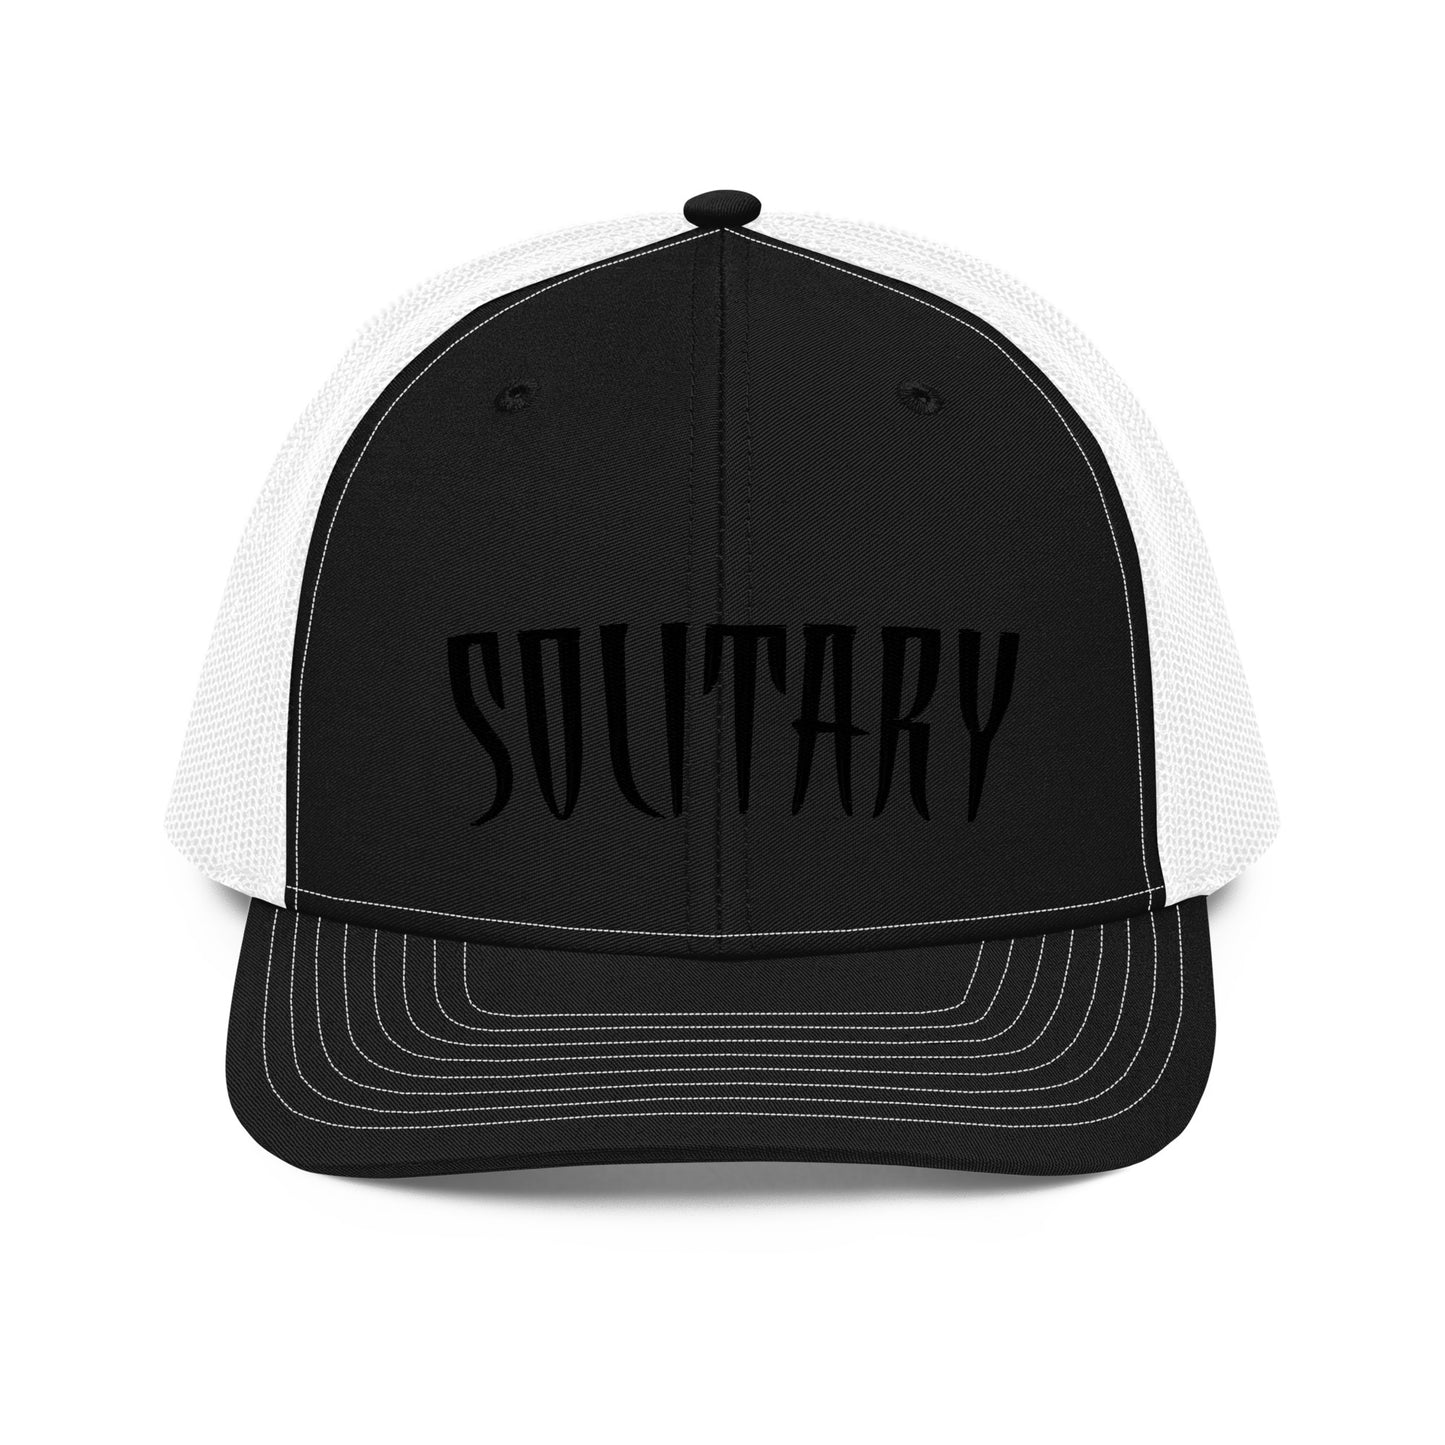 Solitary Trucker Hat